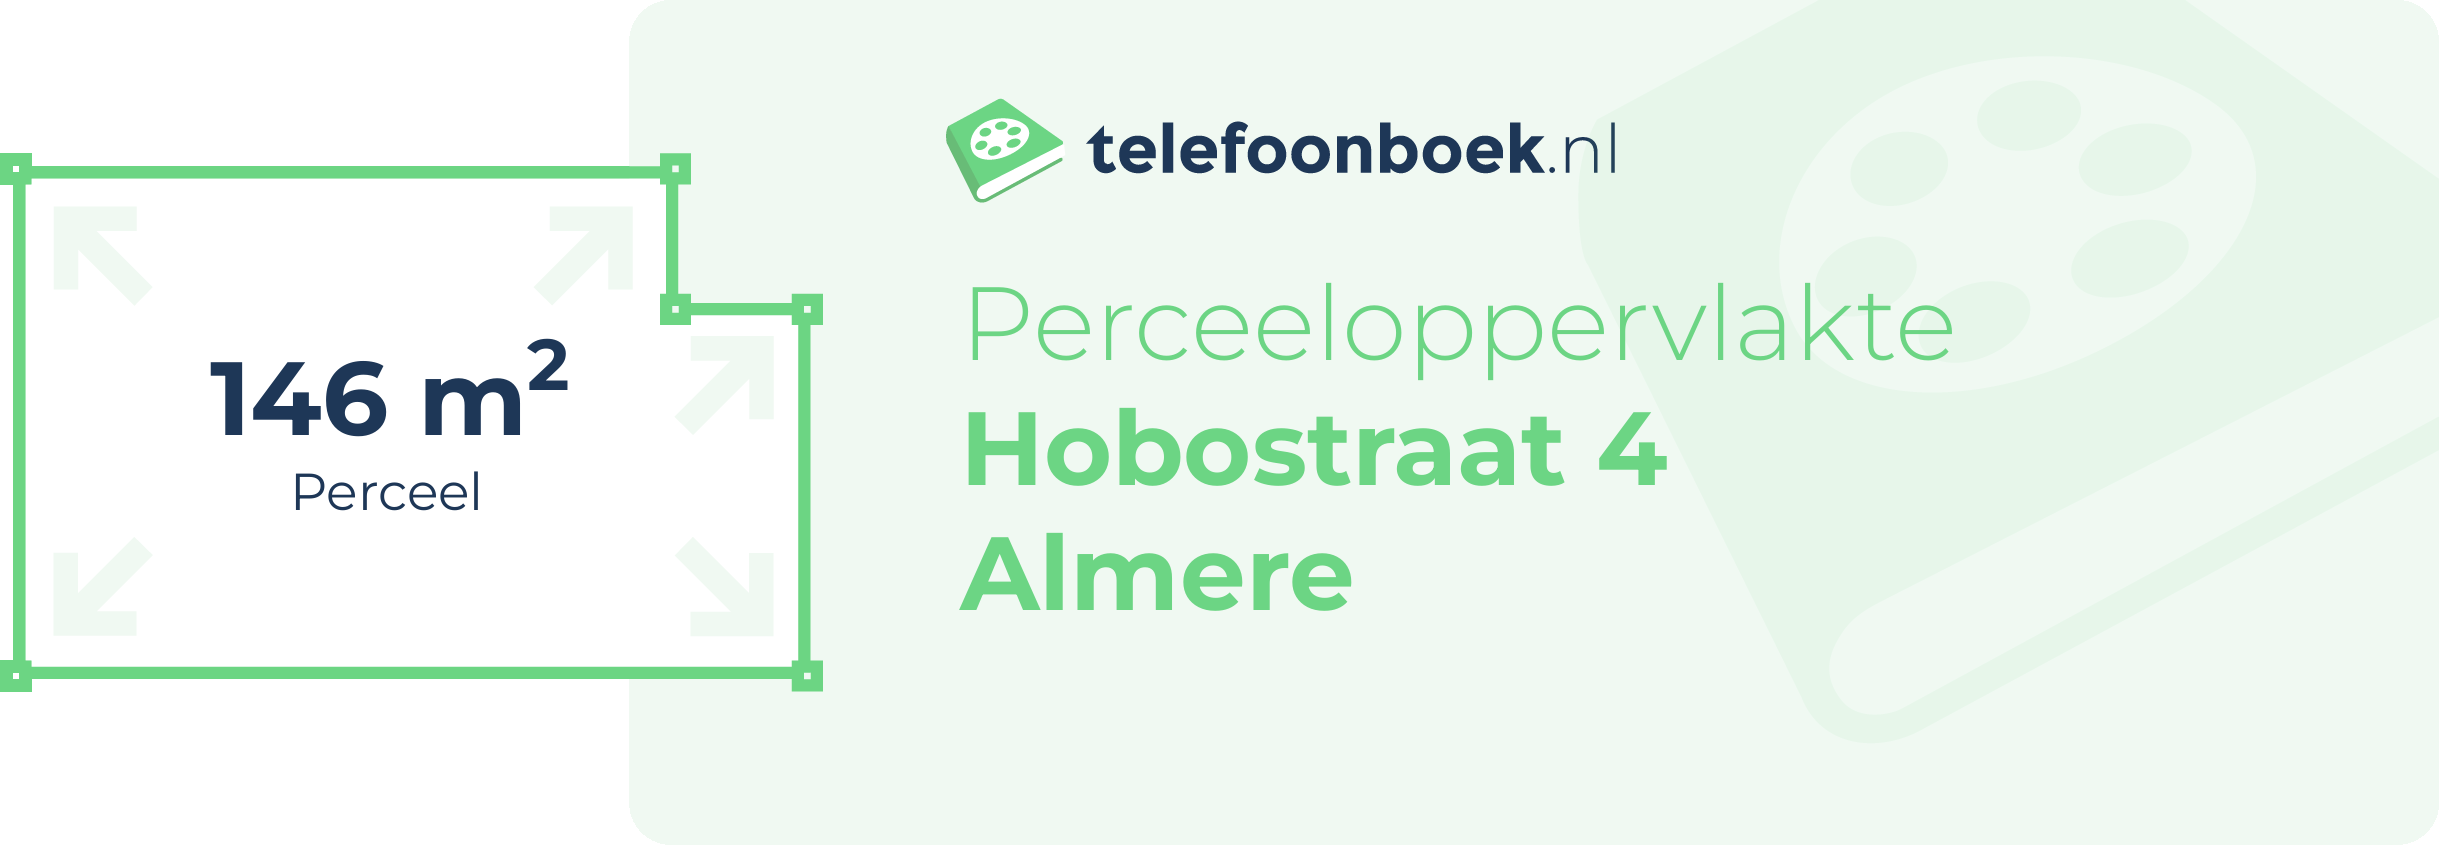 Perceeloppervlakte Hobostraat 4 Almere